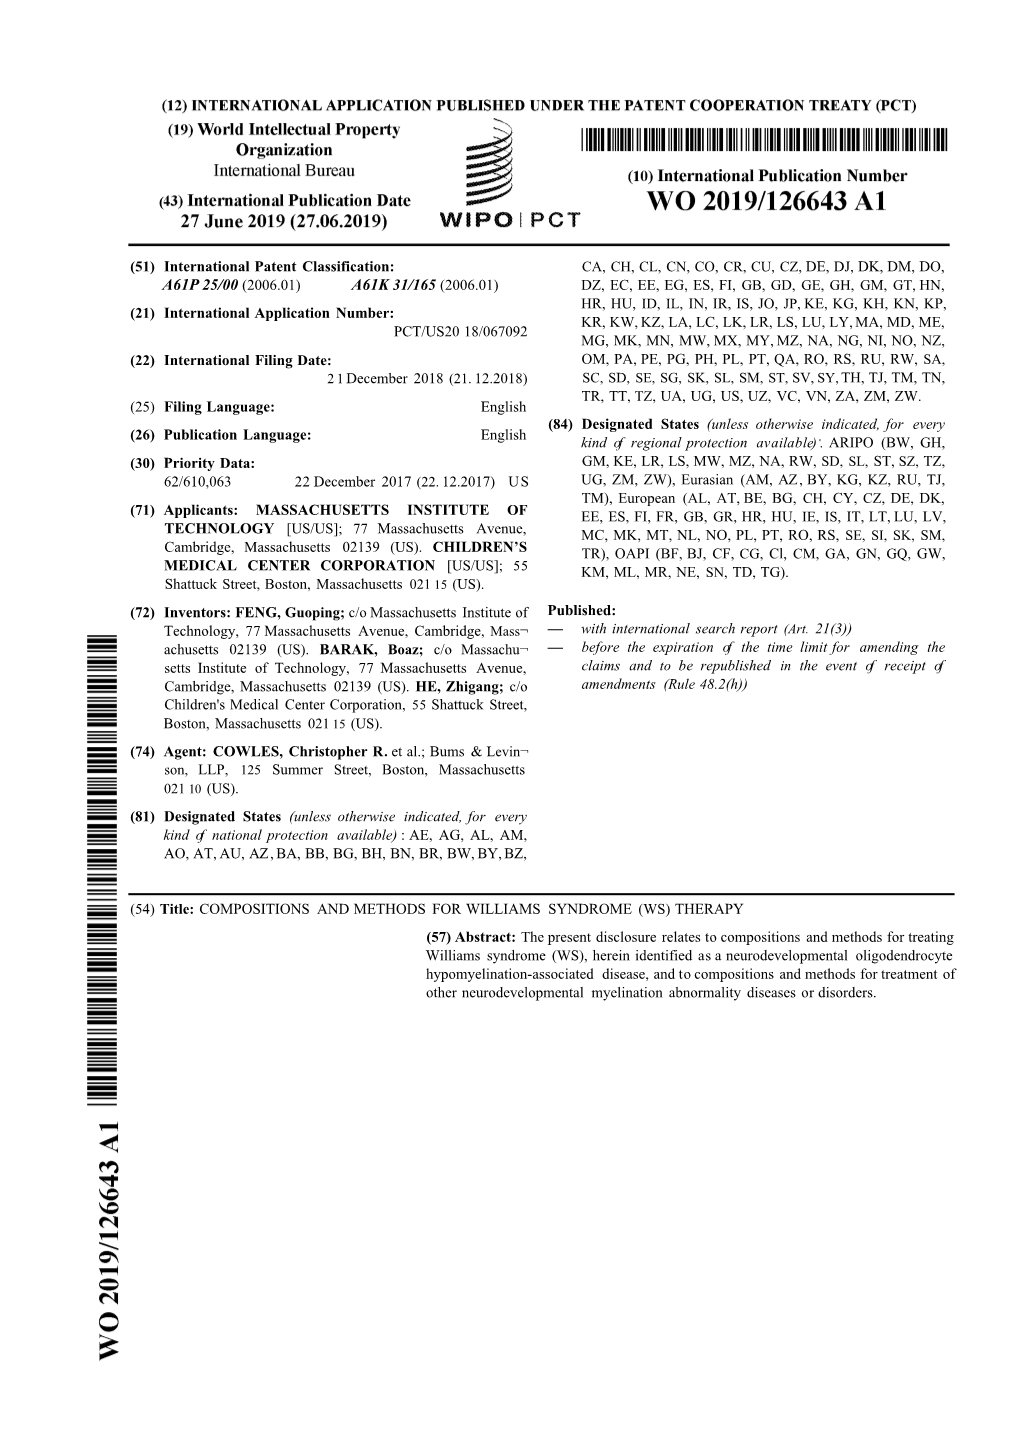 (51) International Patent Classification: A61P 25/00 (2006.01) A61K 31/165